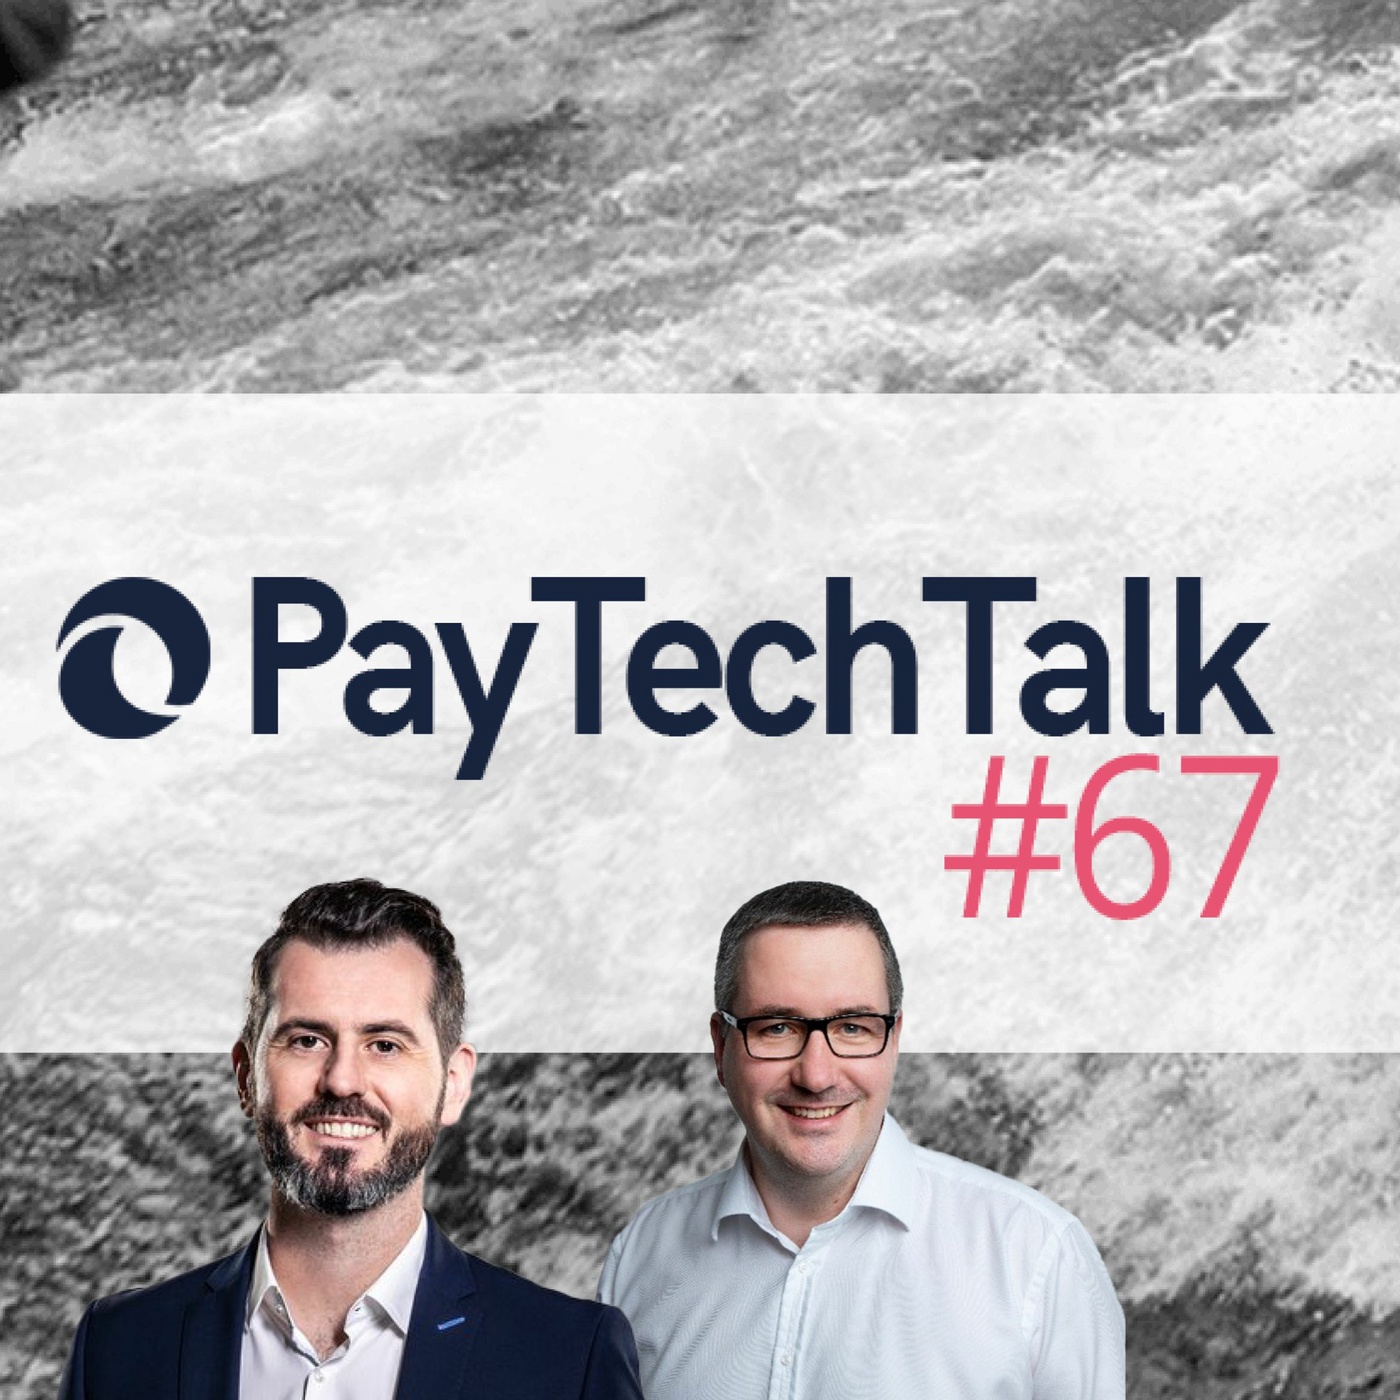 PayTechTalk #67 – Banking-as-a-Service: Geschäftsmodell, Marktumfeld, Wettbewerber & Co.